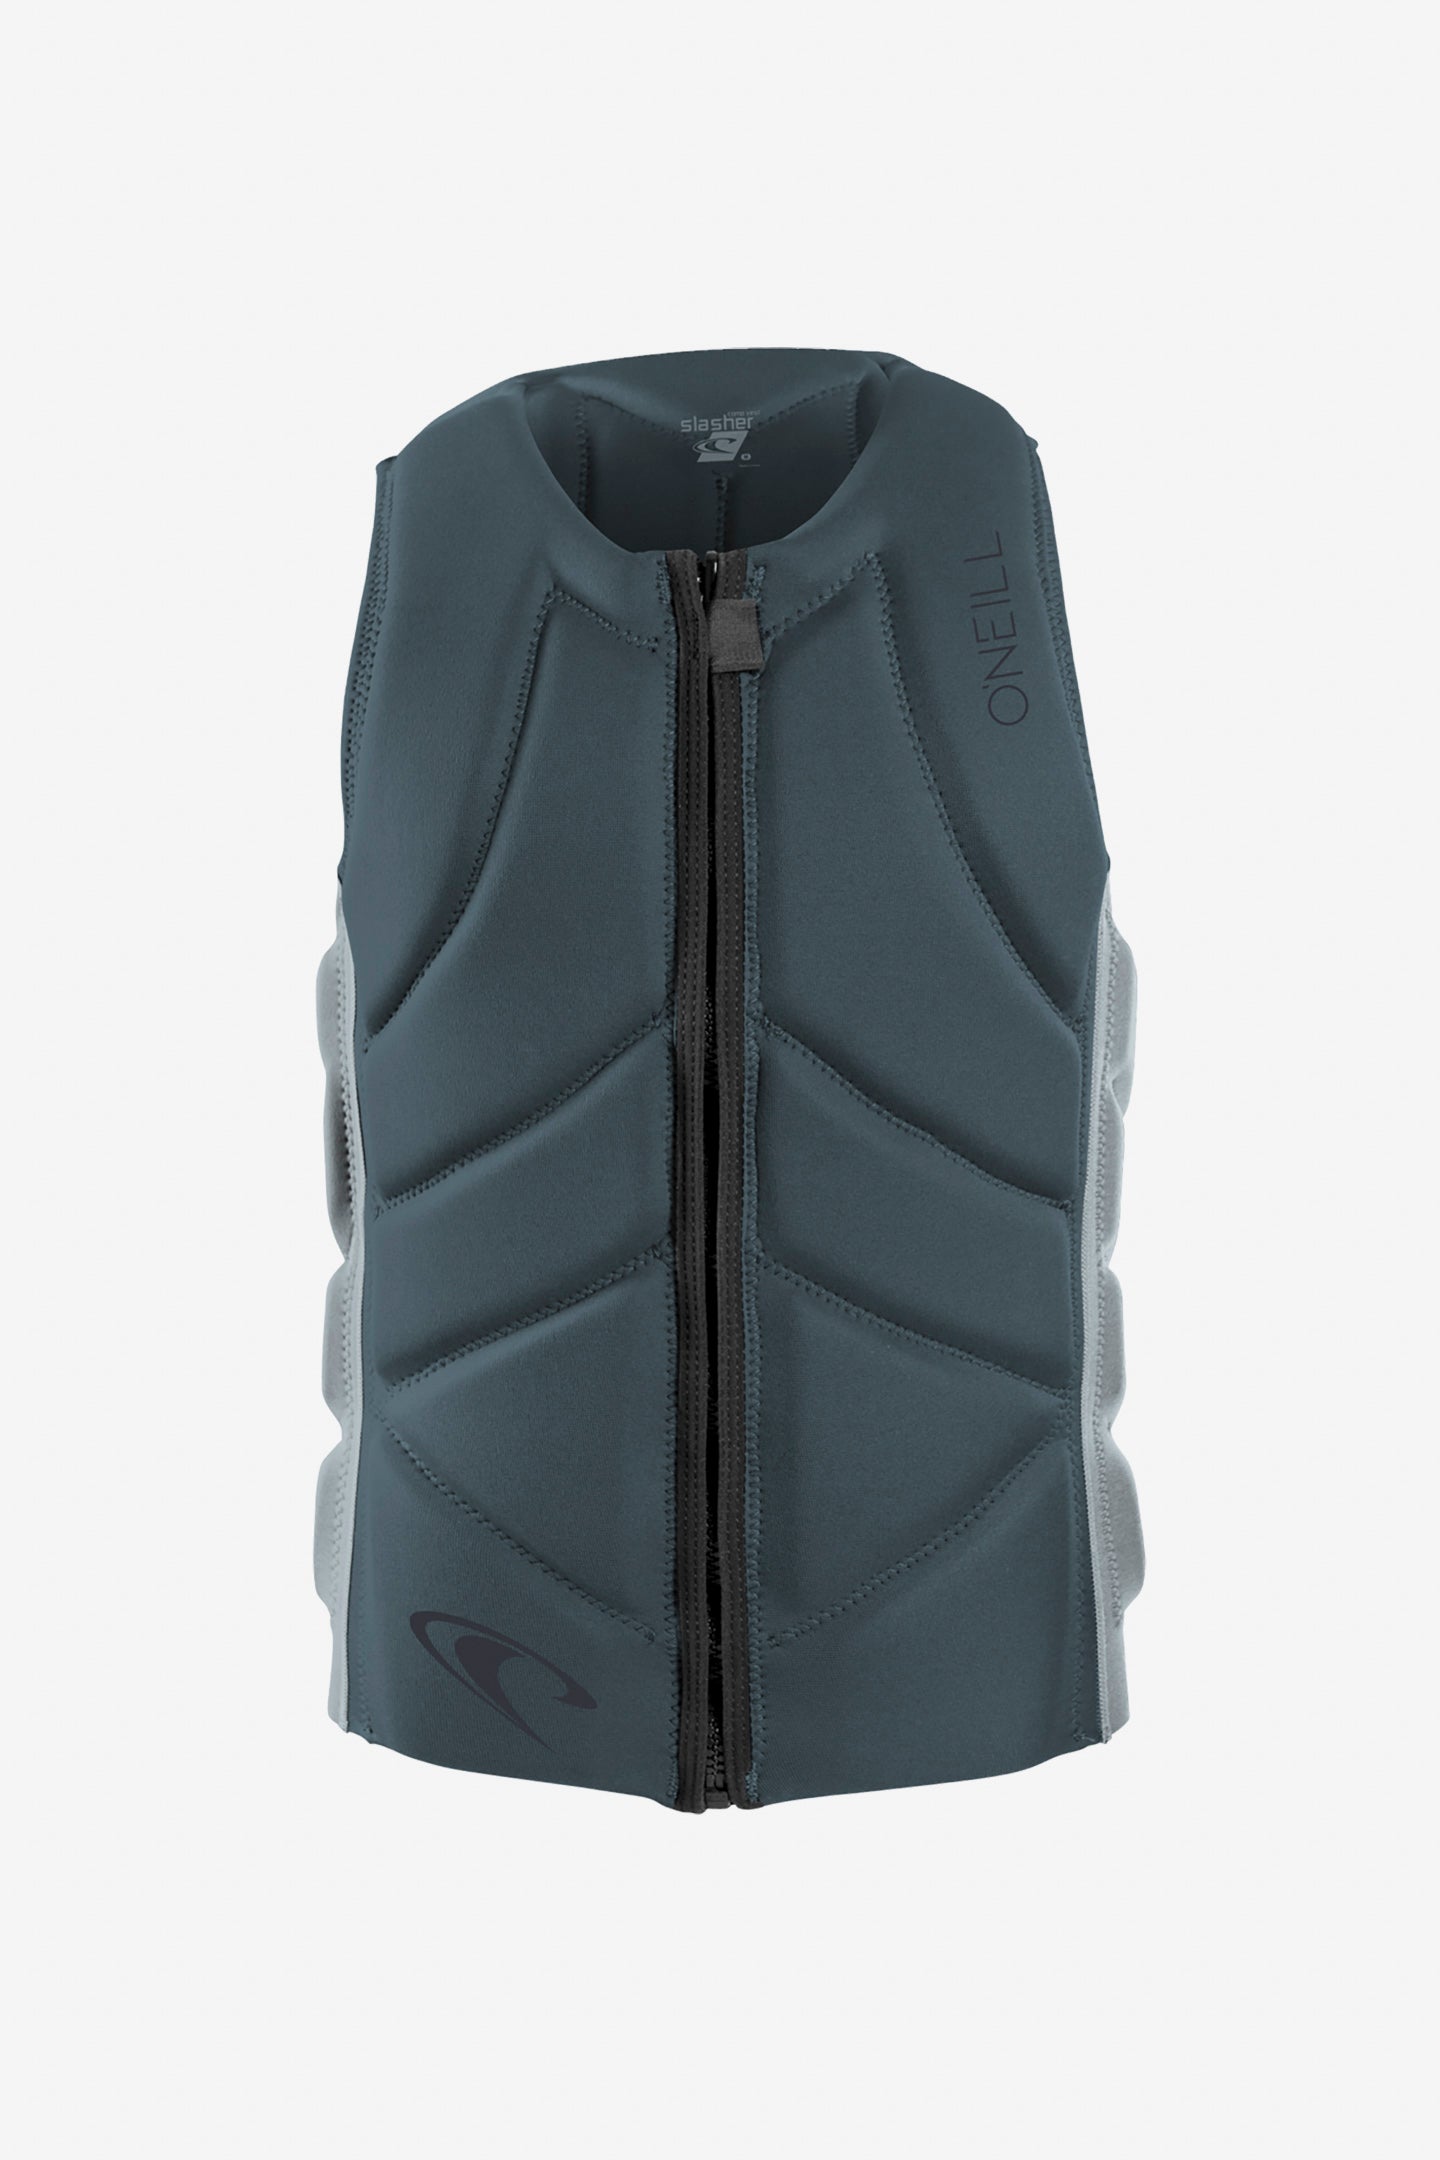 Slasher Comp Vest - Cadetblu/coolgry | O'Neill